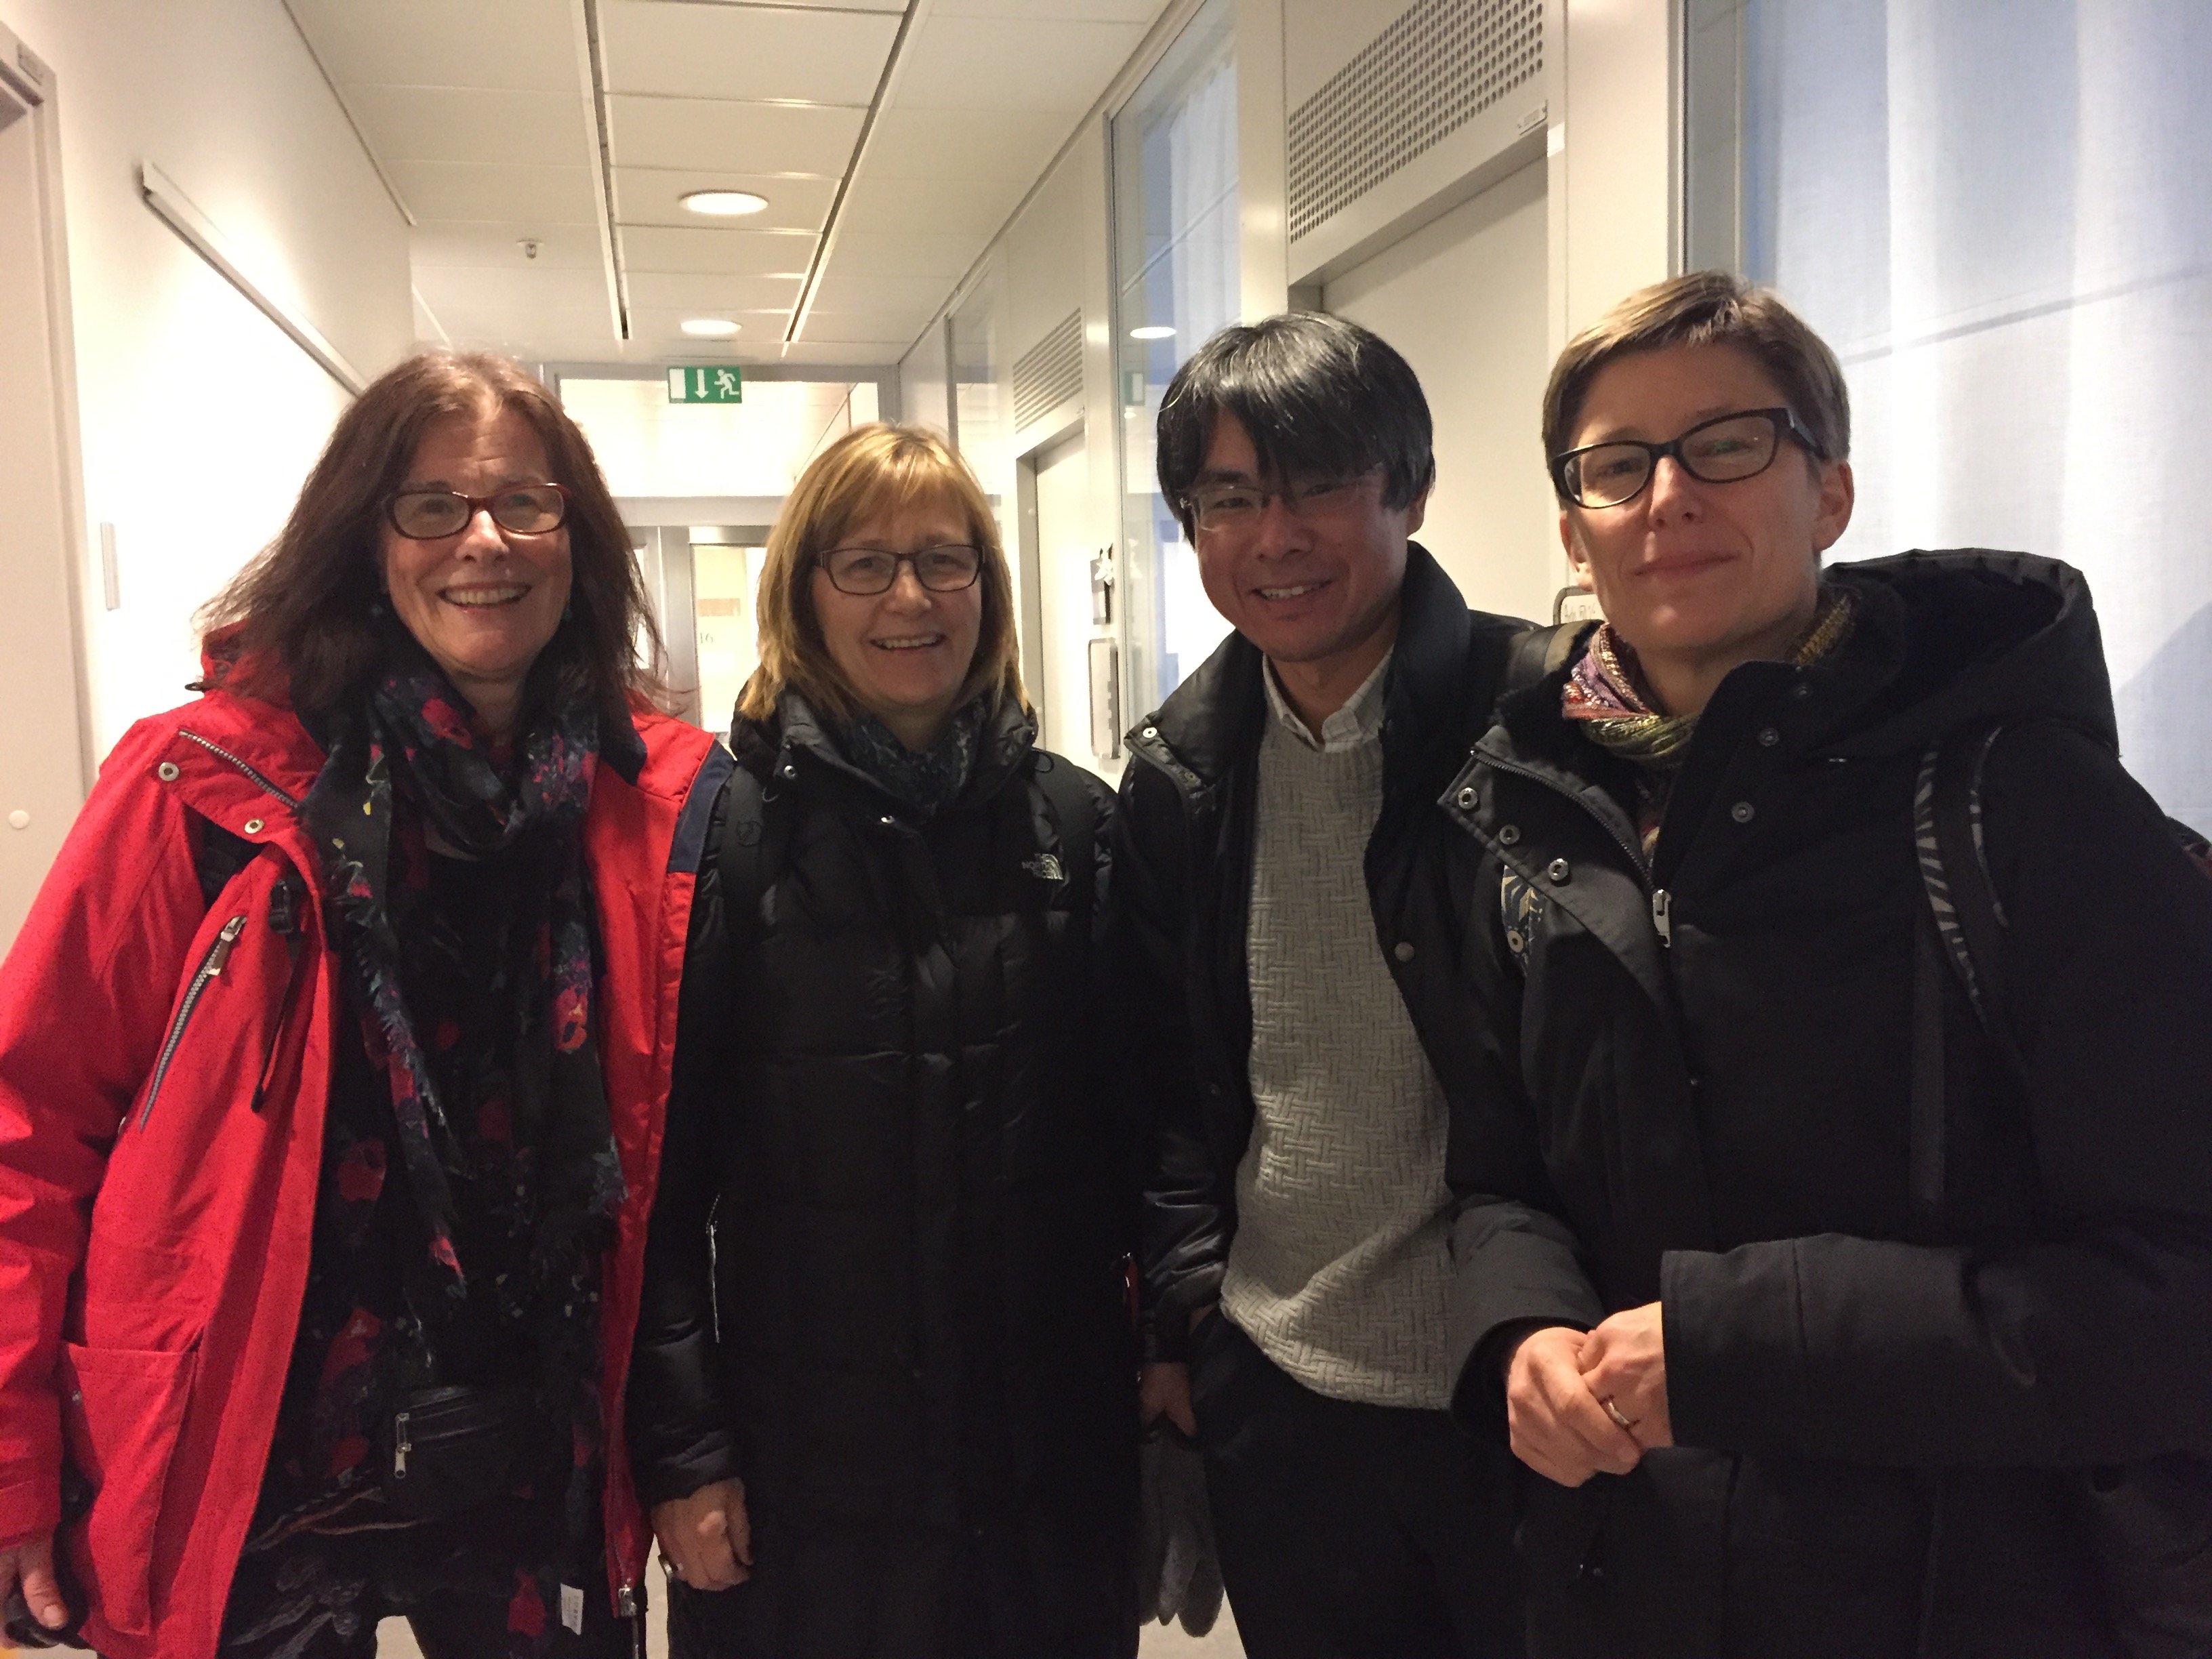 Från vänster: Barbro Lewin, Uppsala Universitet, Ann-Marie Öhrvall, FoU Nordost, Ryo Suzuki, Ryukyu Universitet, Kristina Engwall, FoU Södertörn.